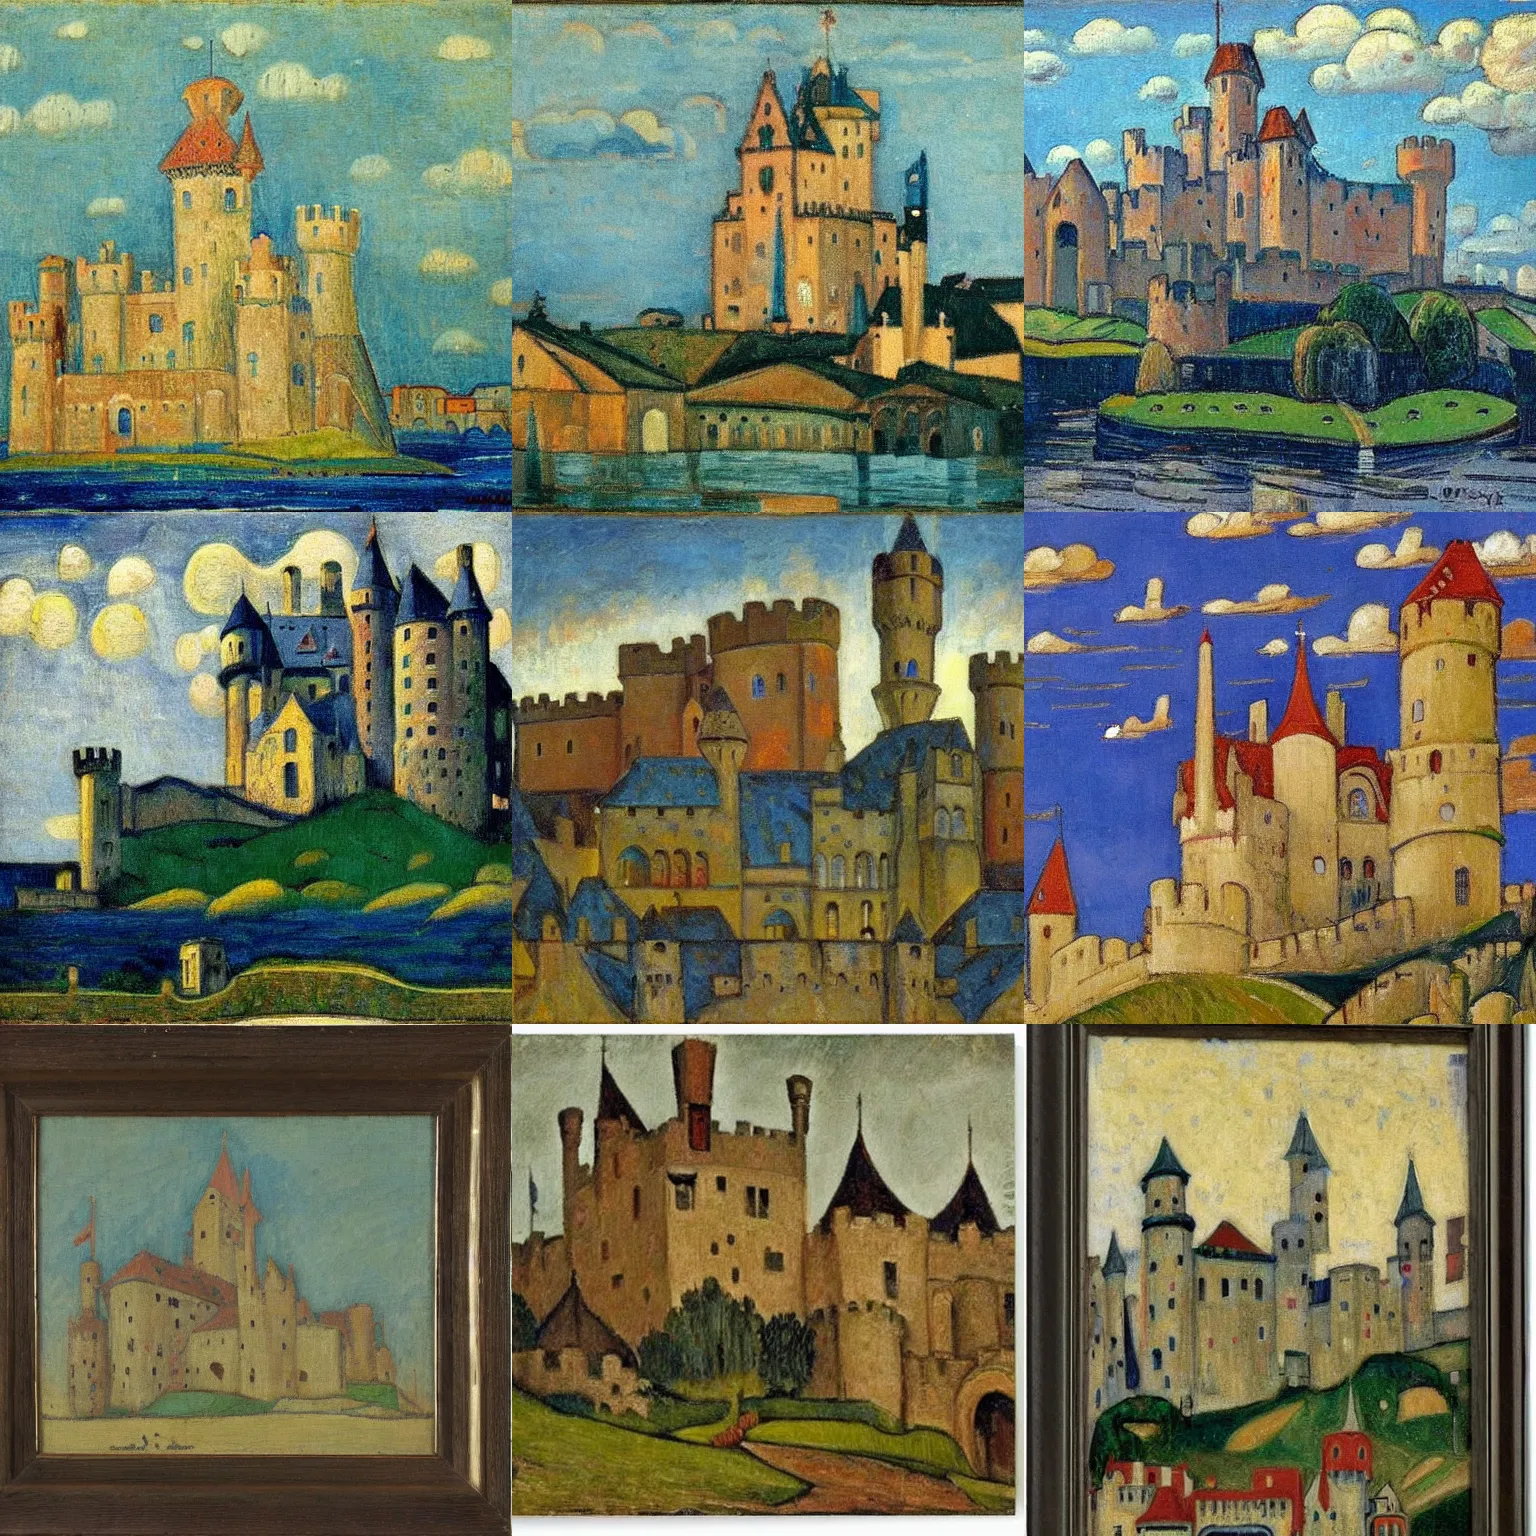 Prompt: medieval castle, by gustave de smet